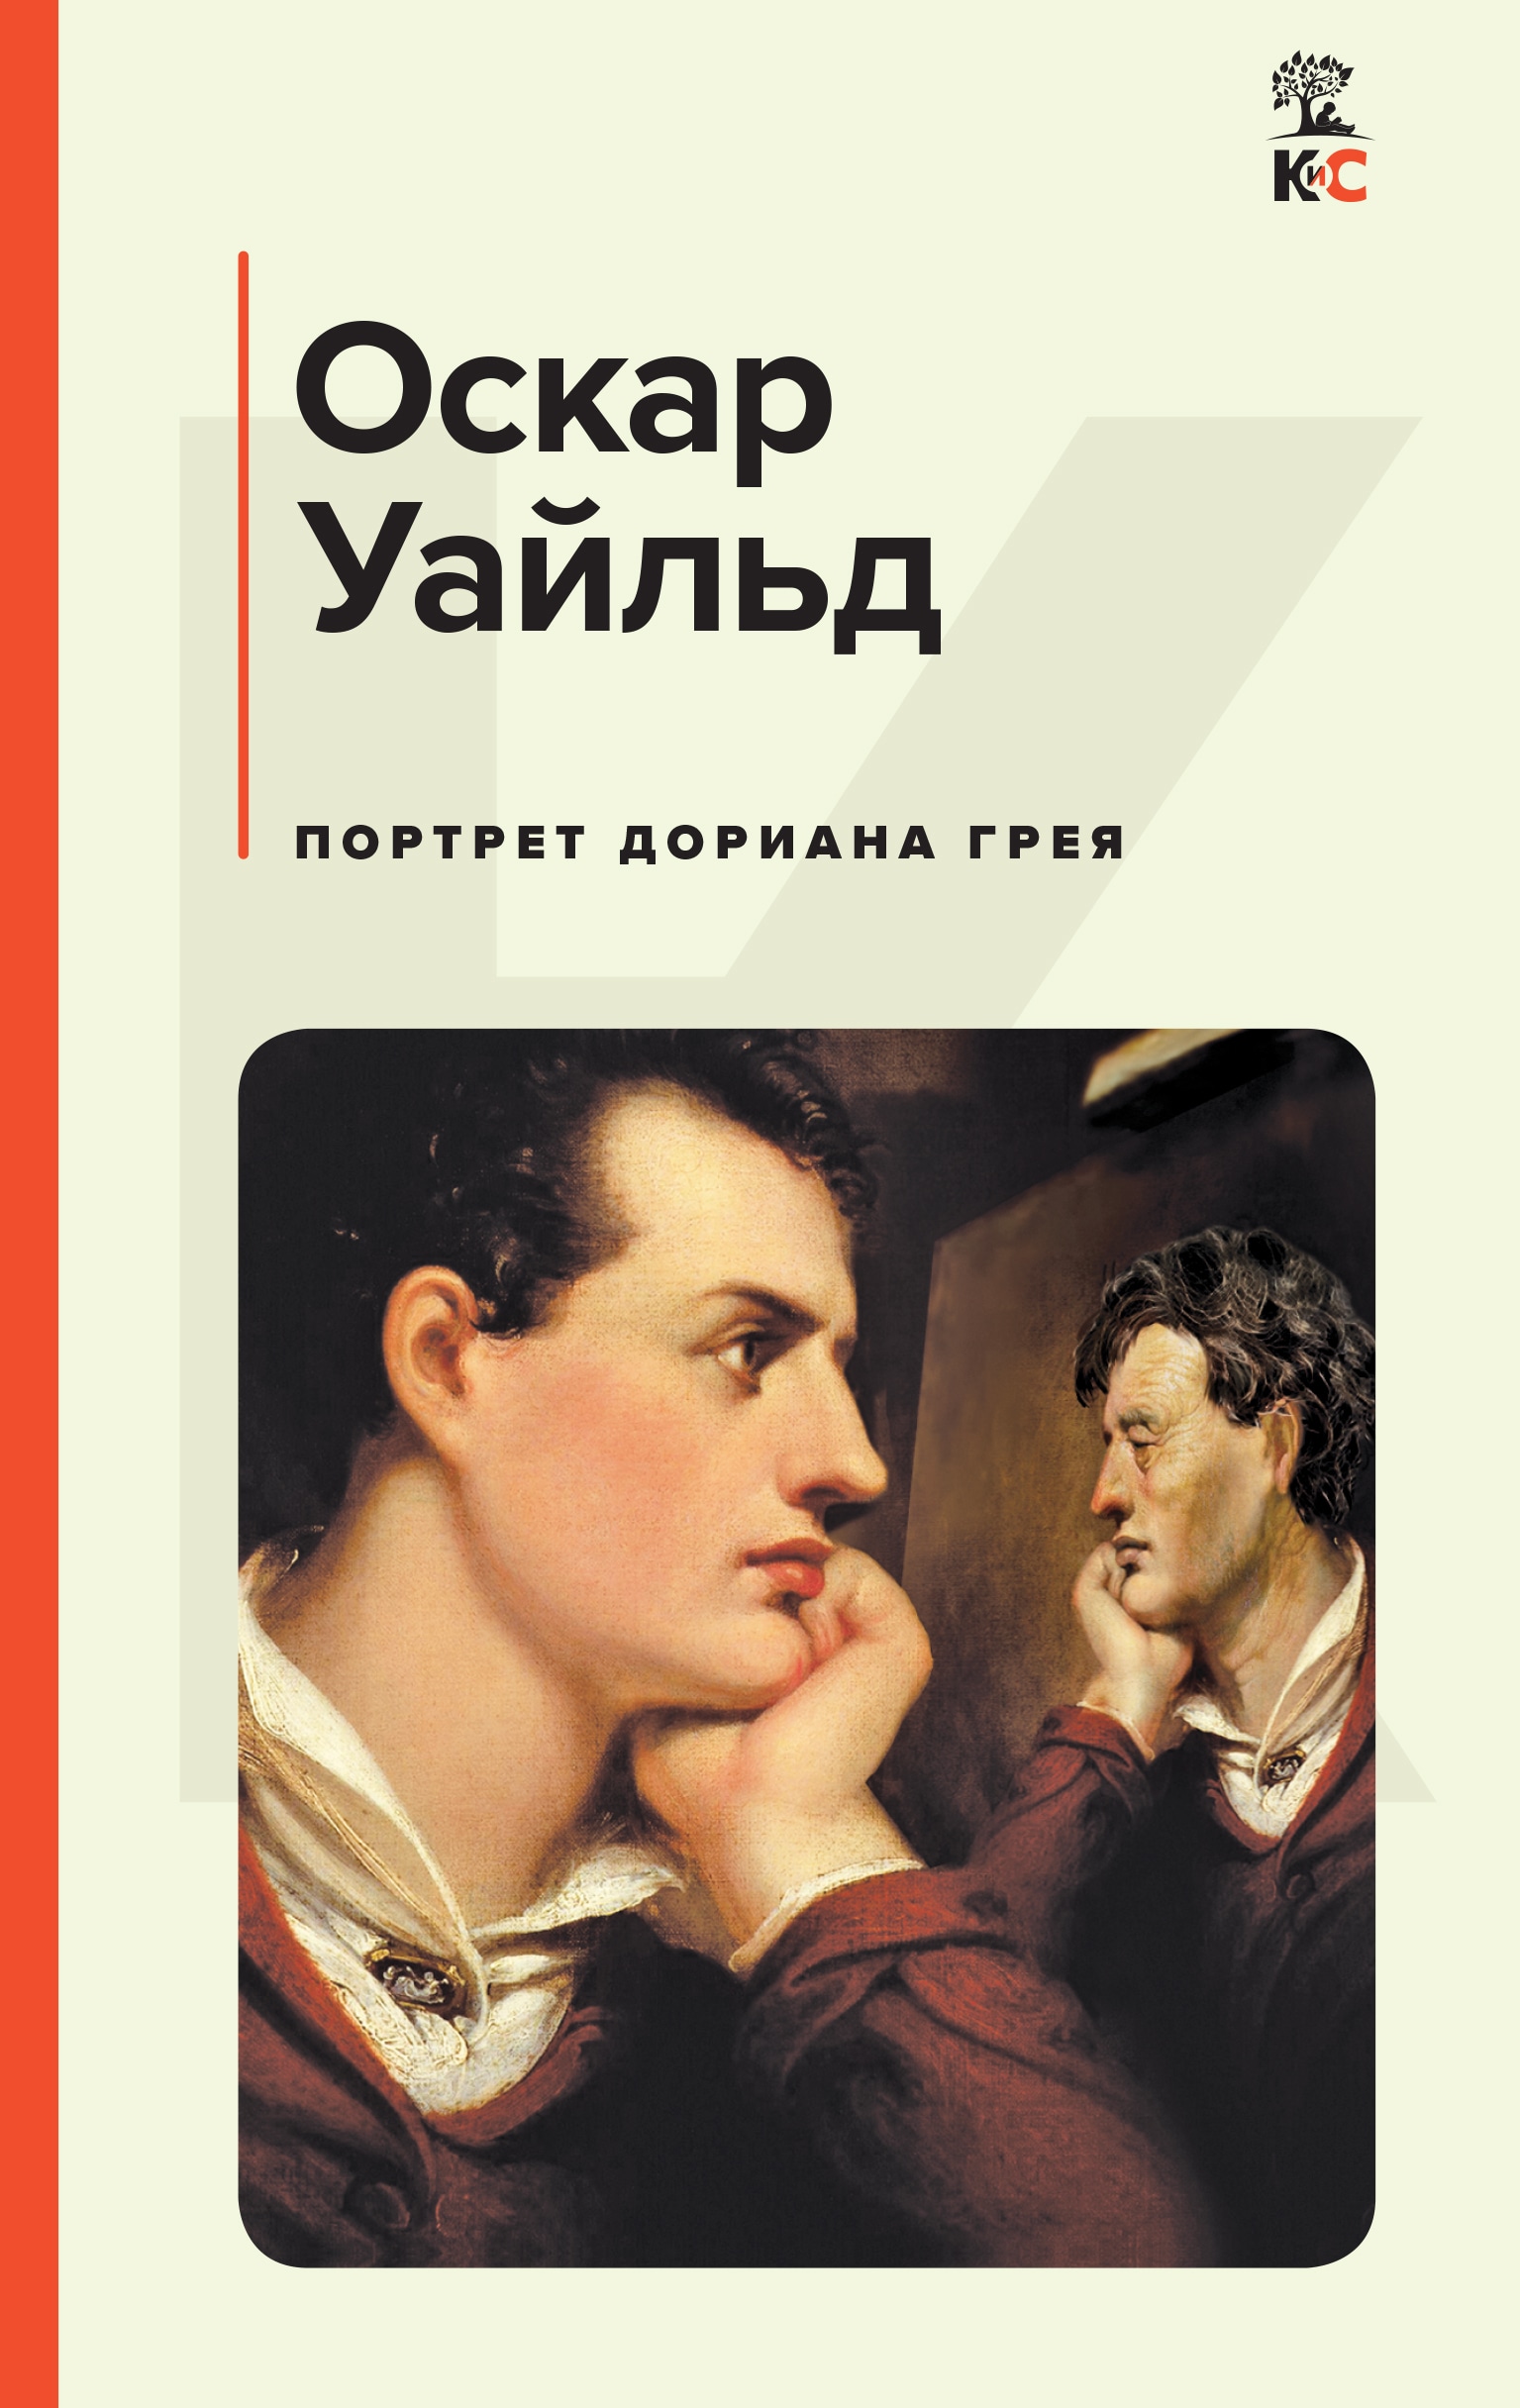 Book “Портрет Дориана Грея” by Оскар Уайльд — September 2, 2022